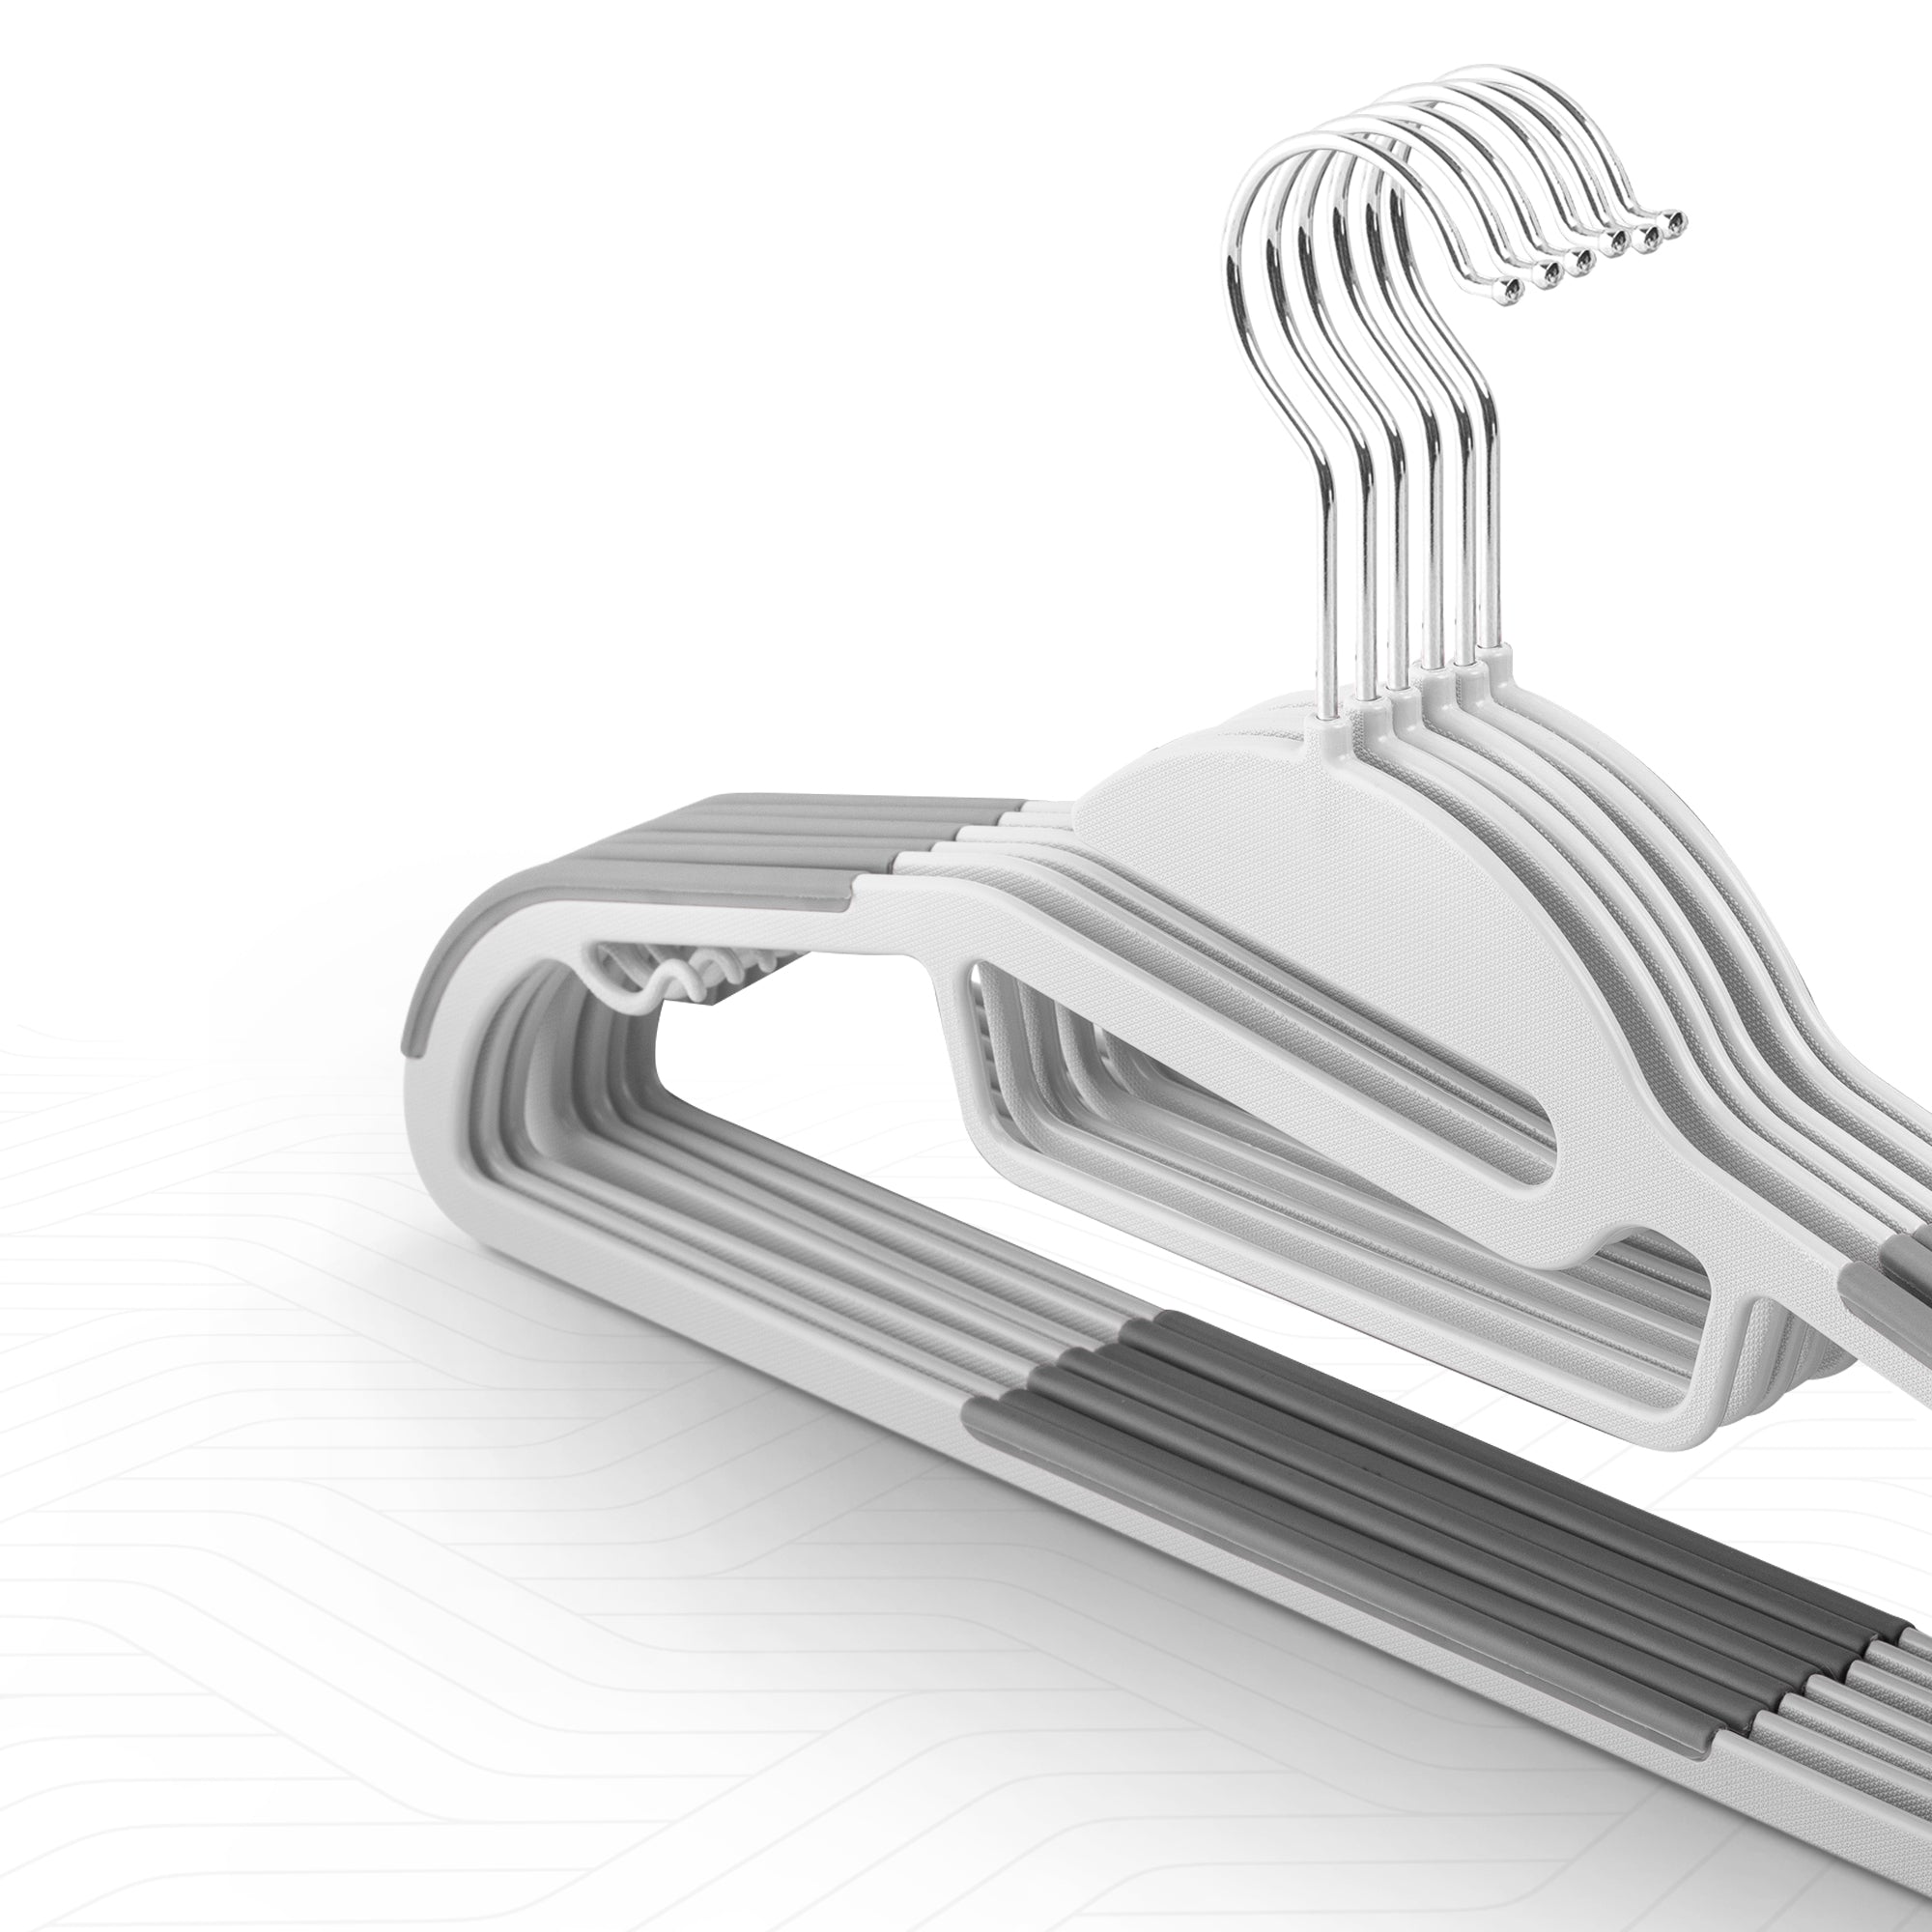 50 Pack Non-Slip Hangers - Durable Slimline Design, Space Saving With 360 Swivel